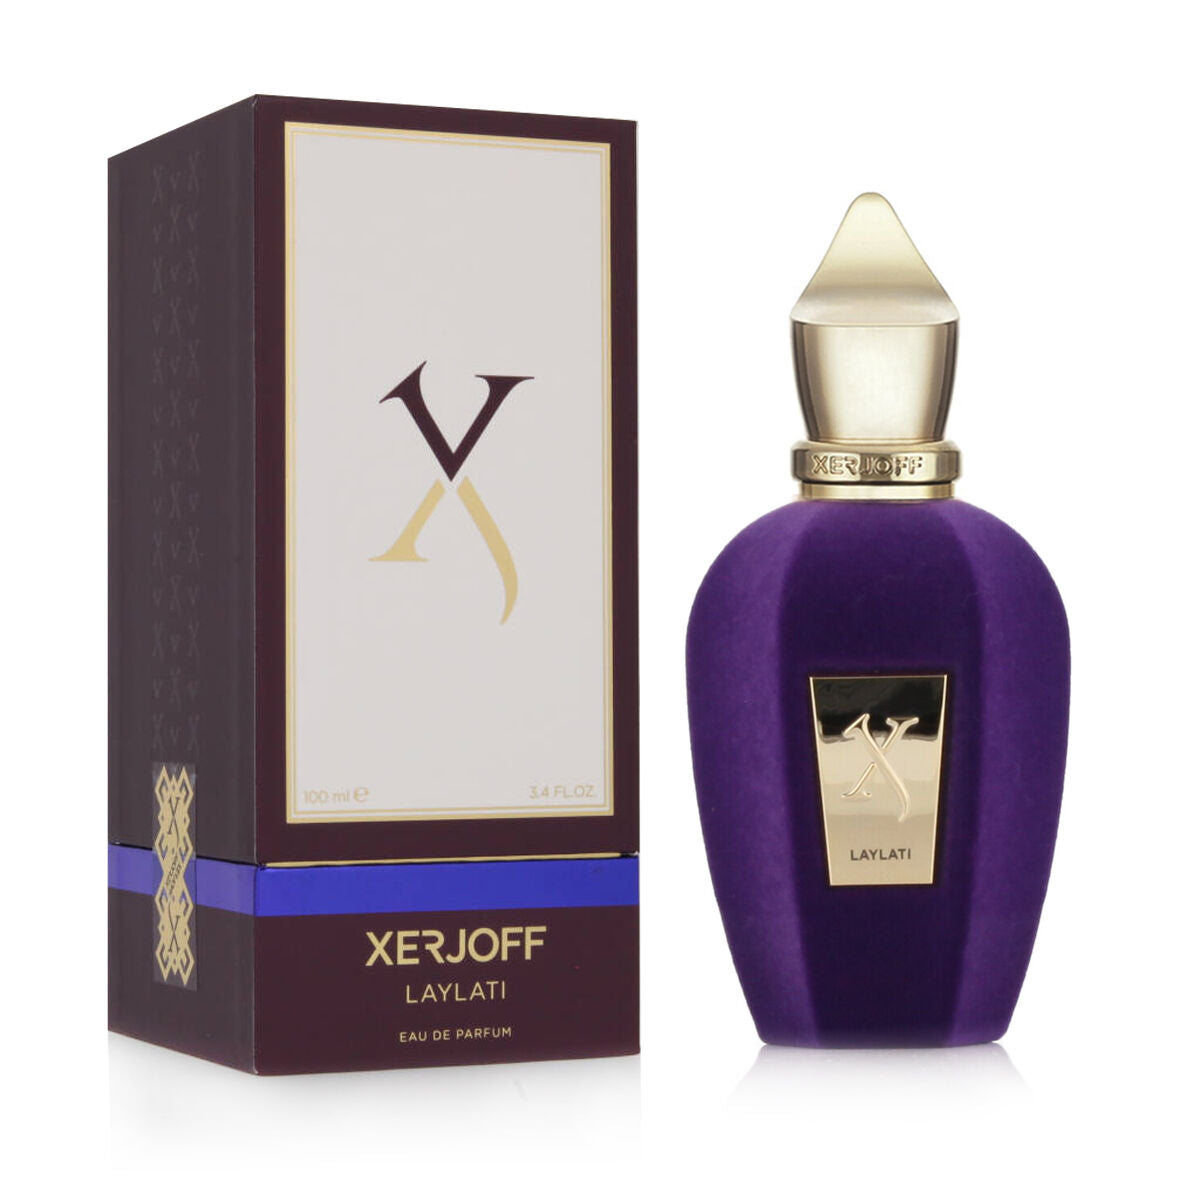 Kaufe Unisex-Parfüm Xerjoff EDP V Laylati 100 ml bei AWK Flagship um € 193.00